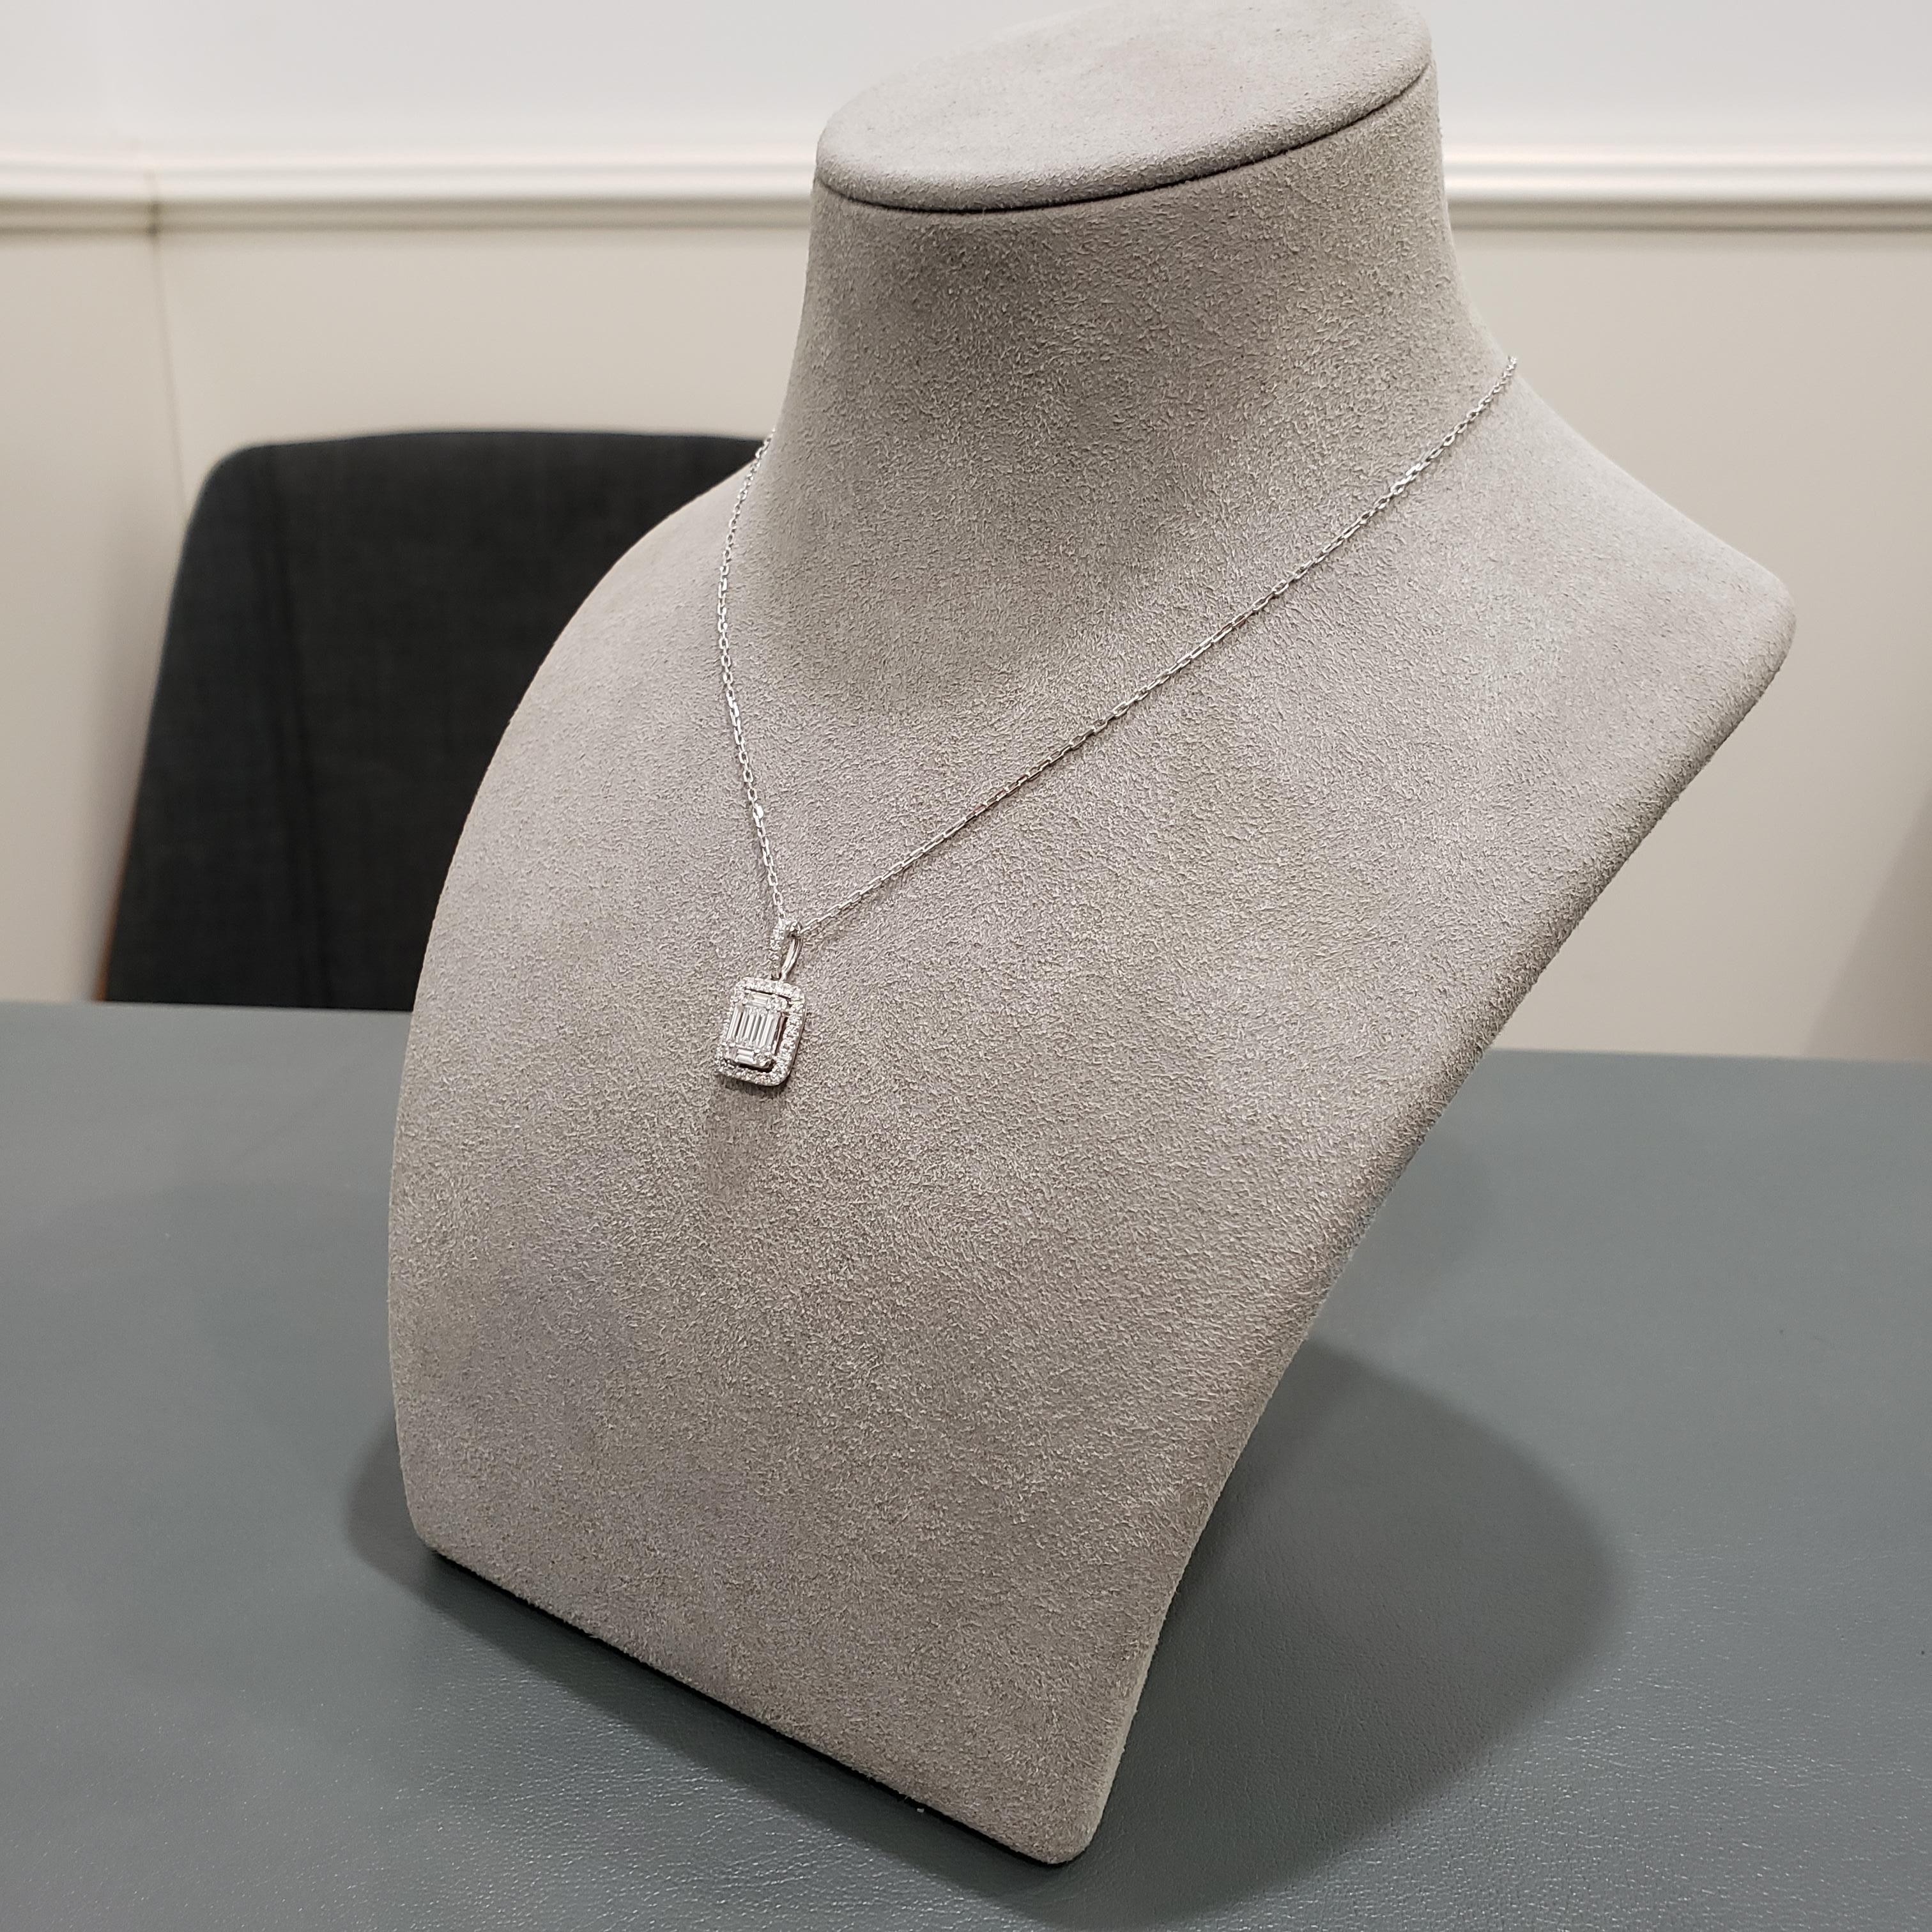 Baguette Cut Roman Malakov, Illusion Set Diamond Halo Pendant Necklace For Sale